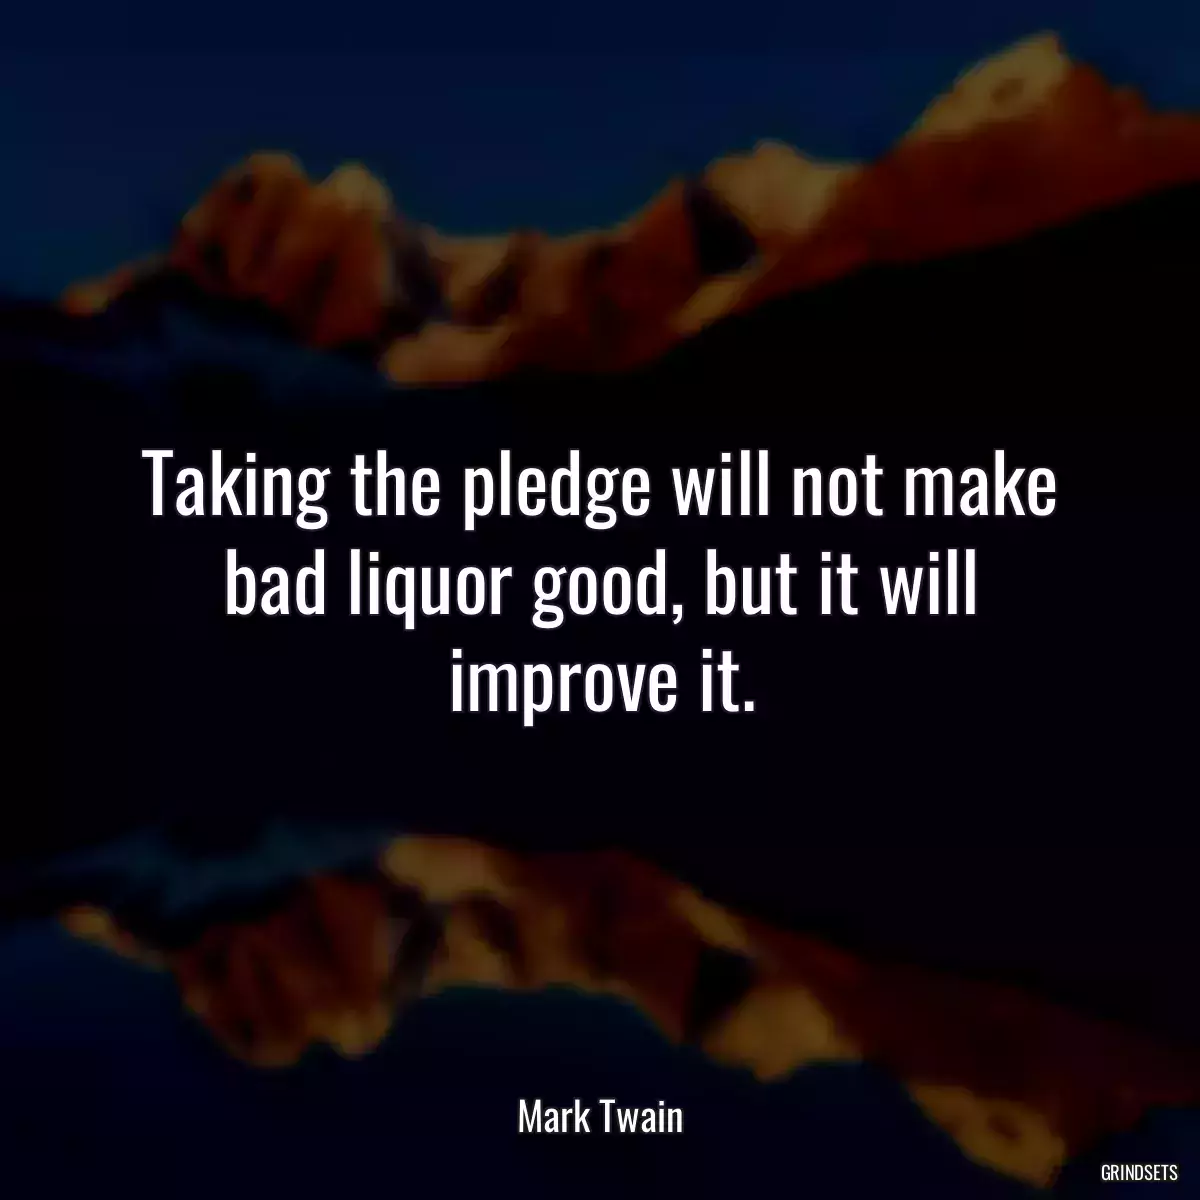 Taking the pledge will not make bad liquor good, but it will improve it.